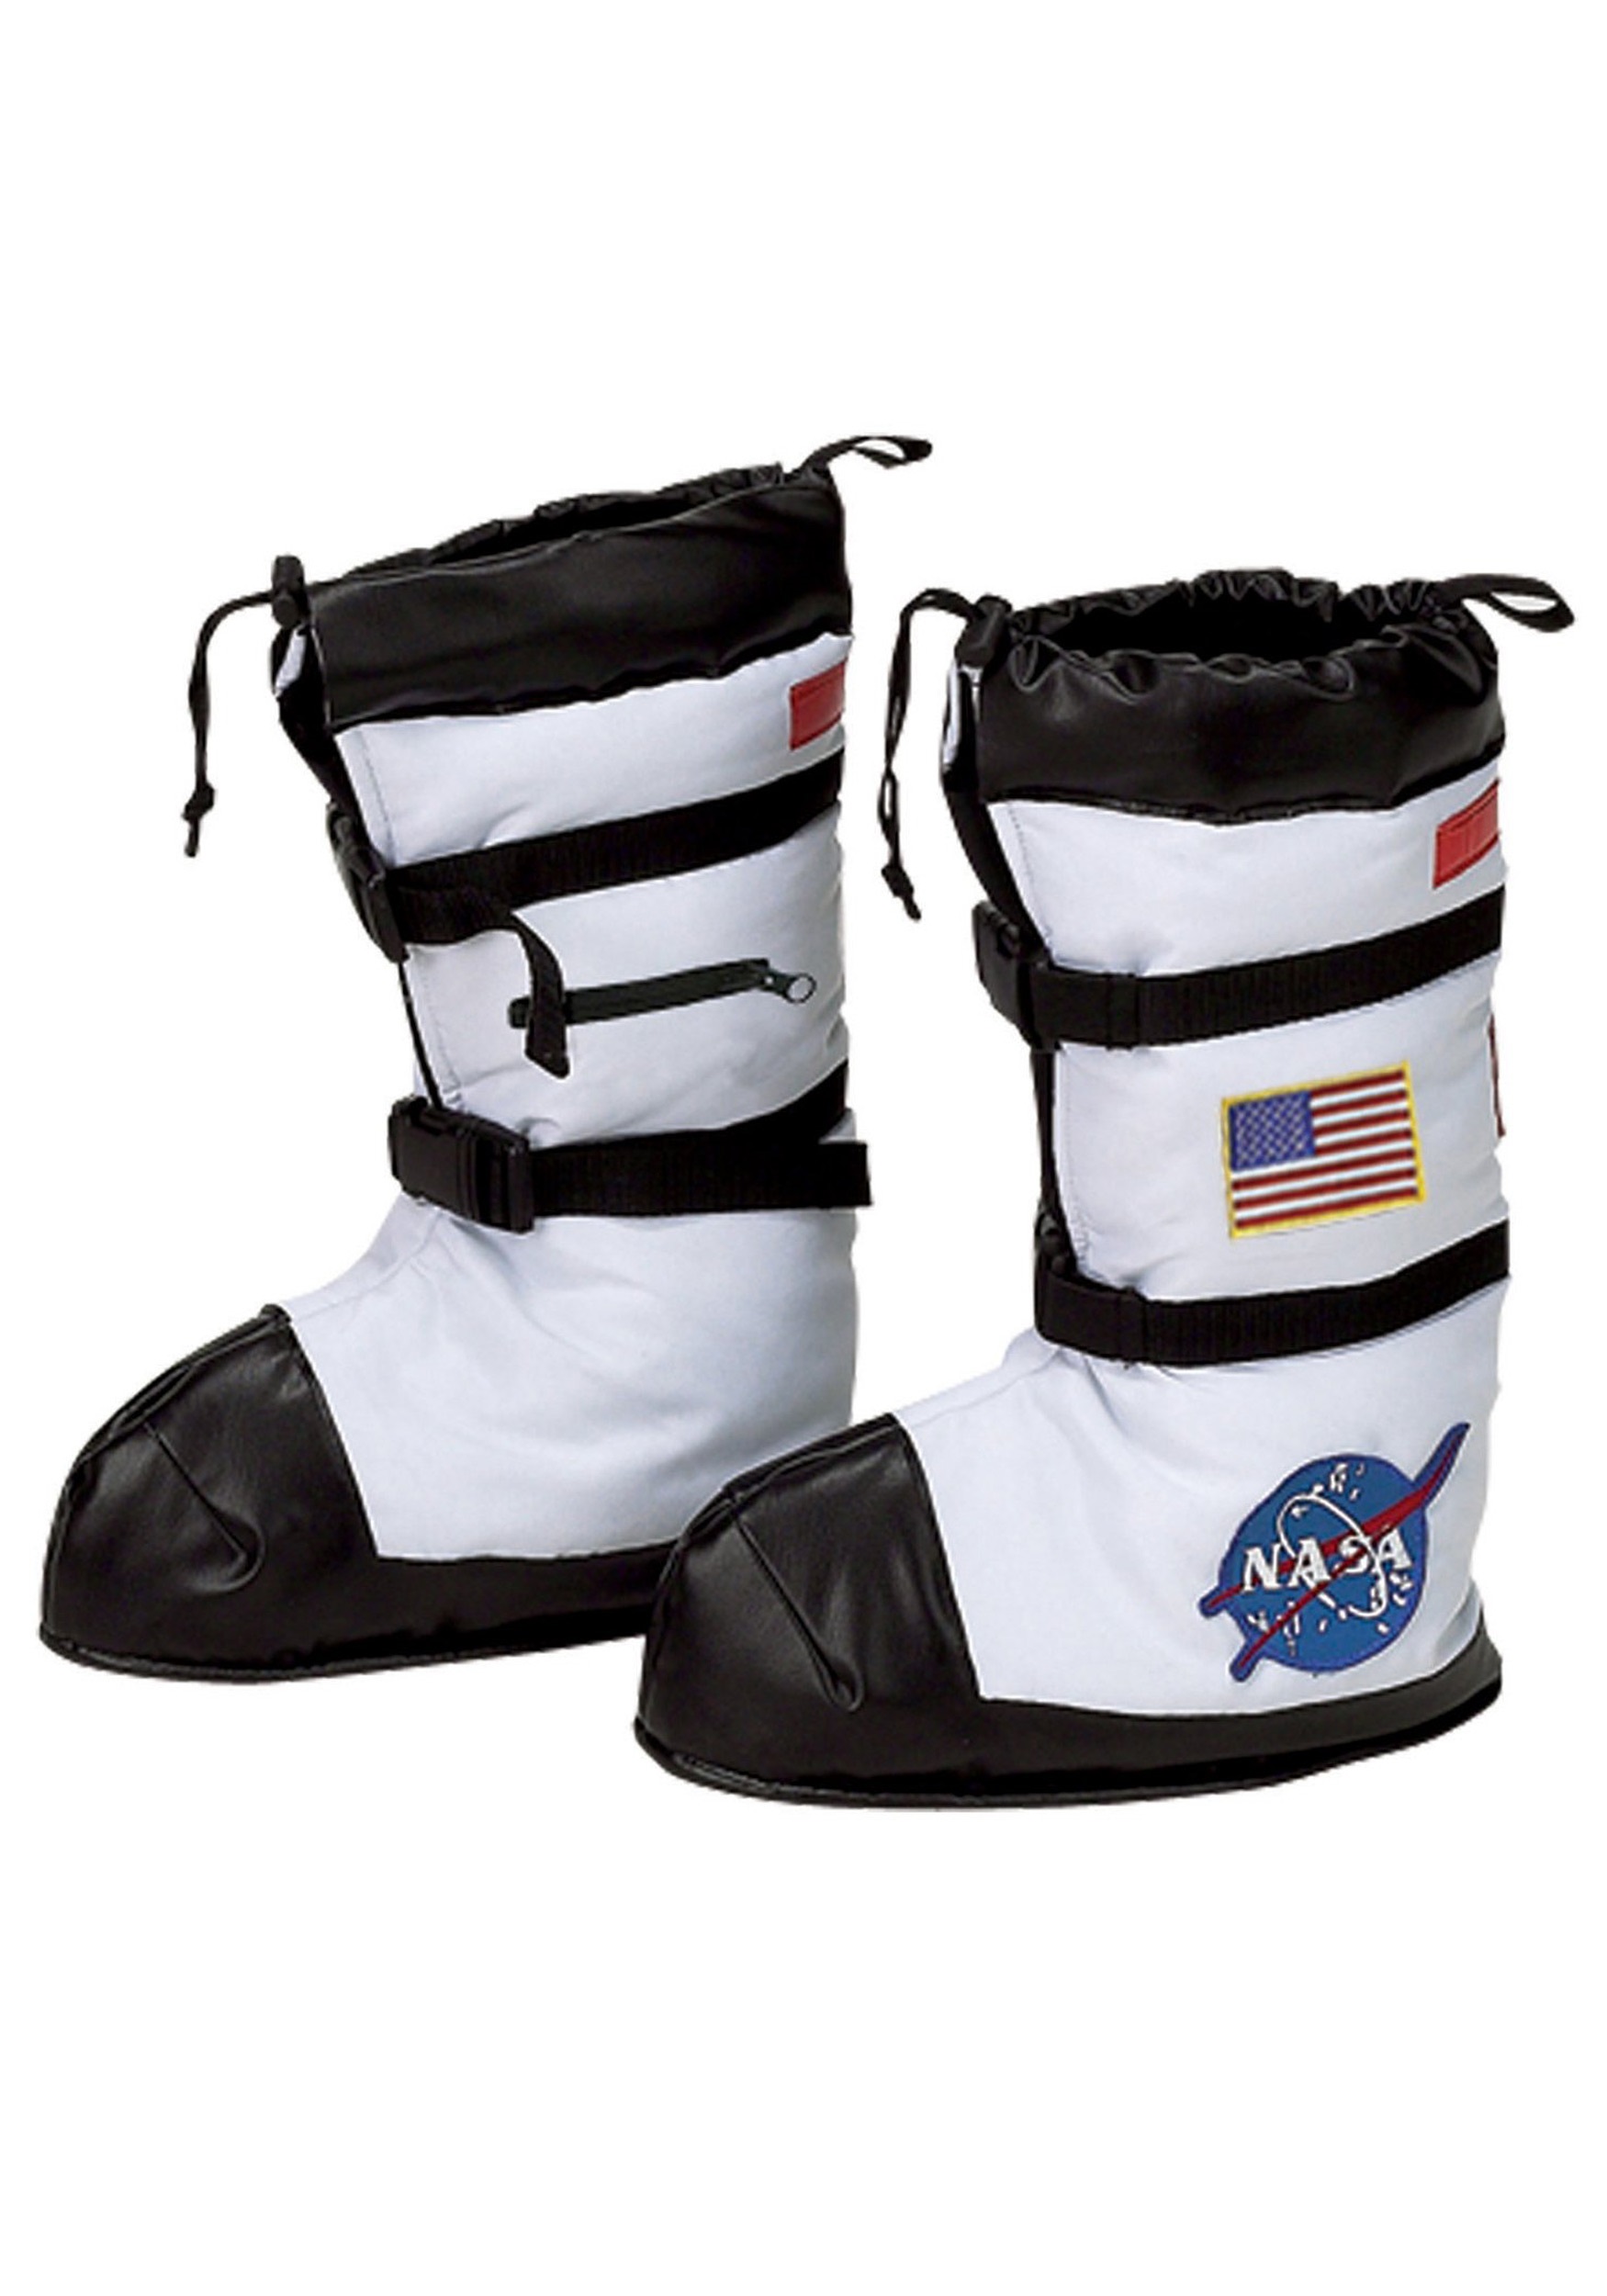 Boots astronaut